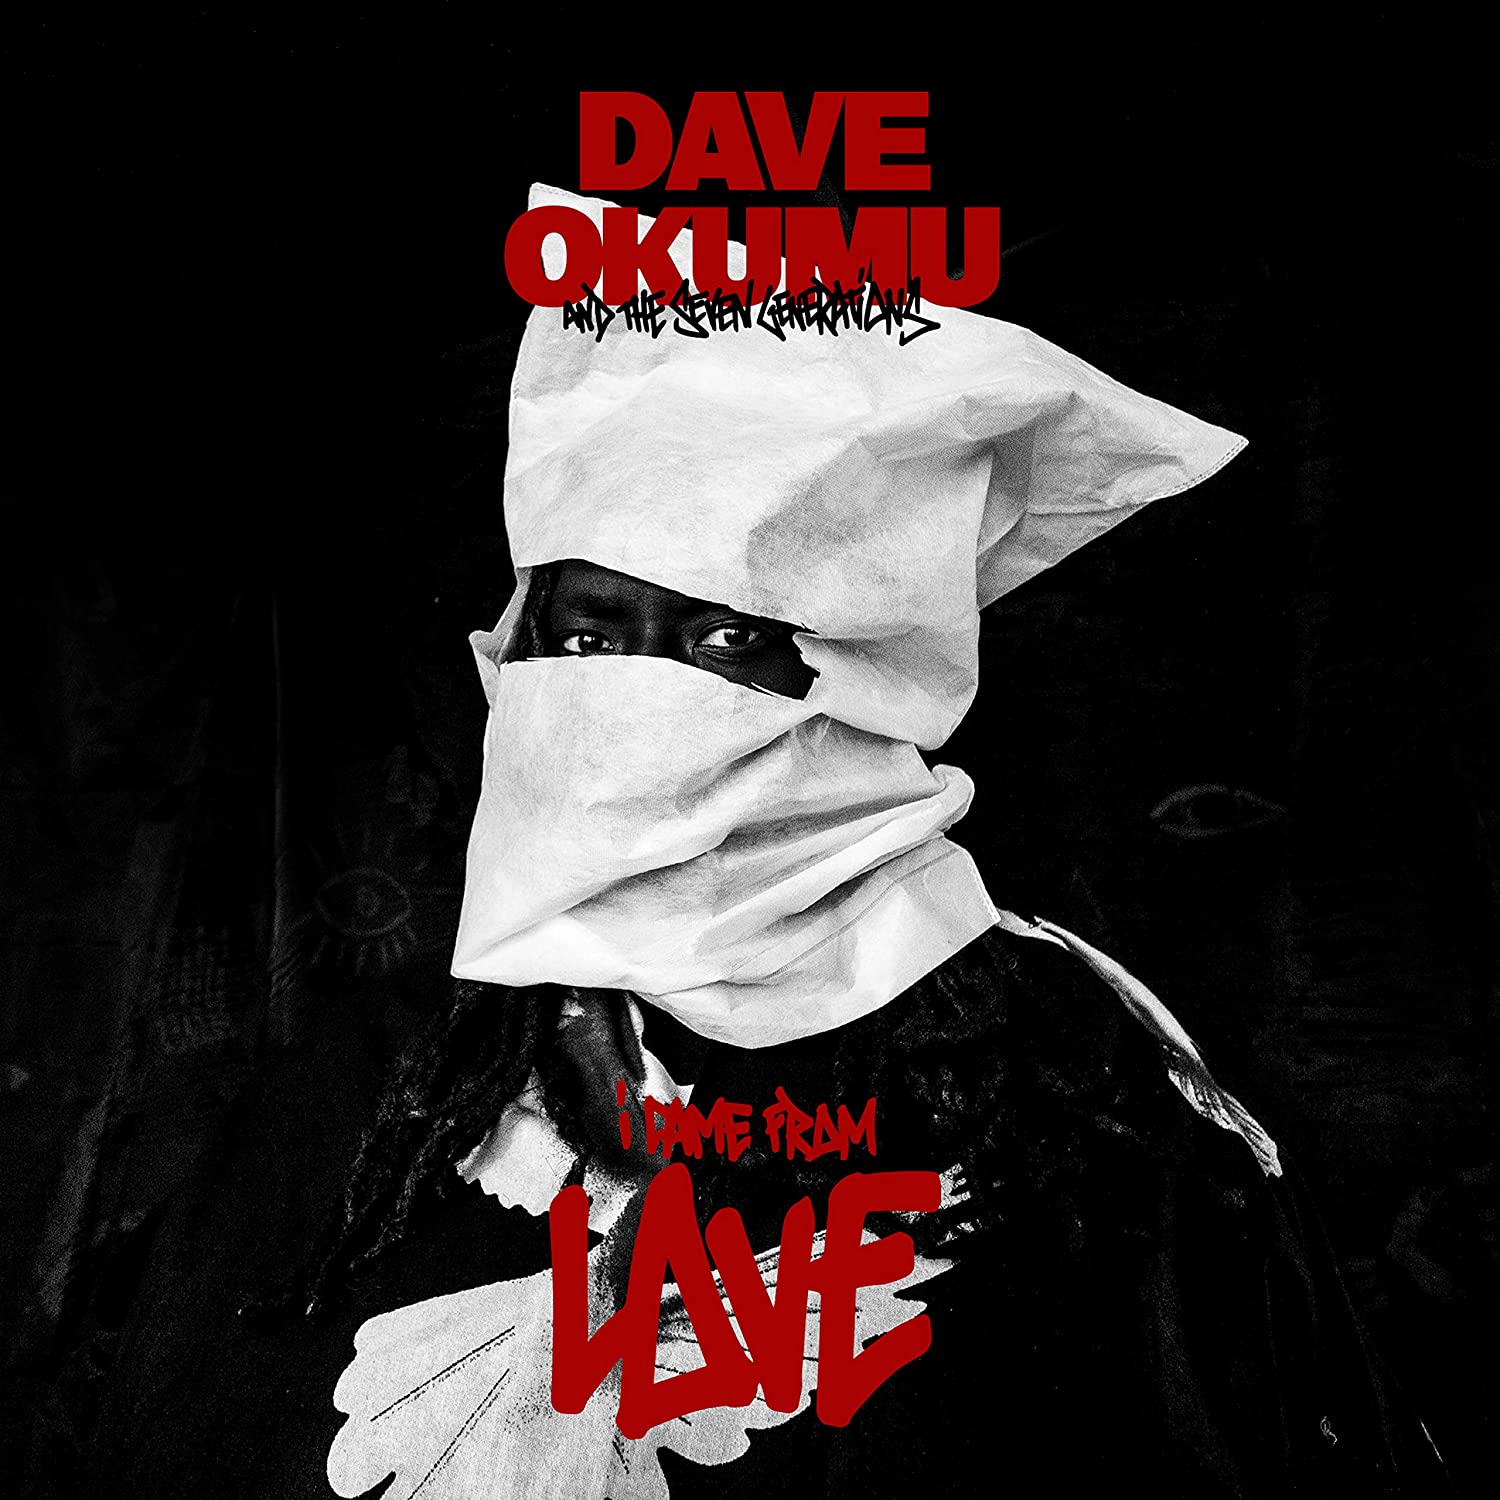 Dave Okumu nuovo album e tour - immagini